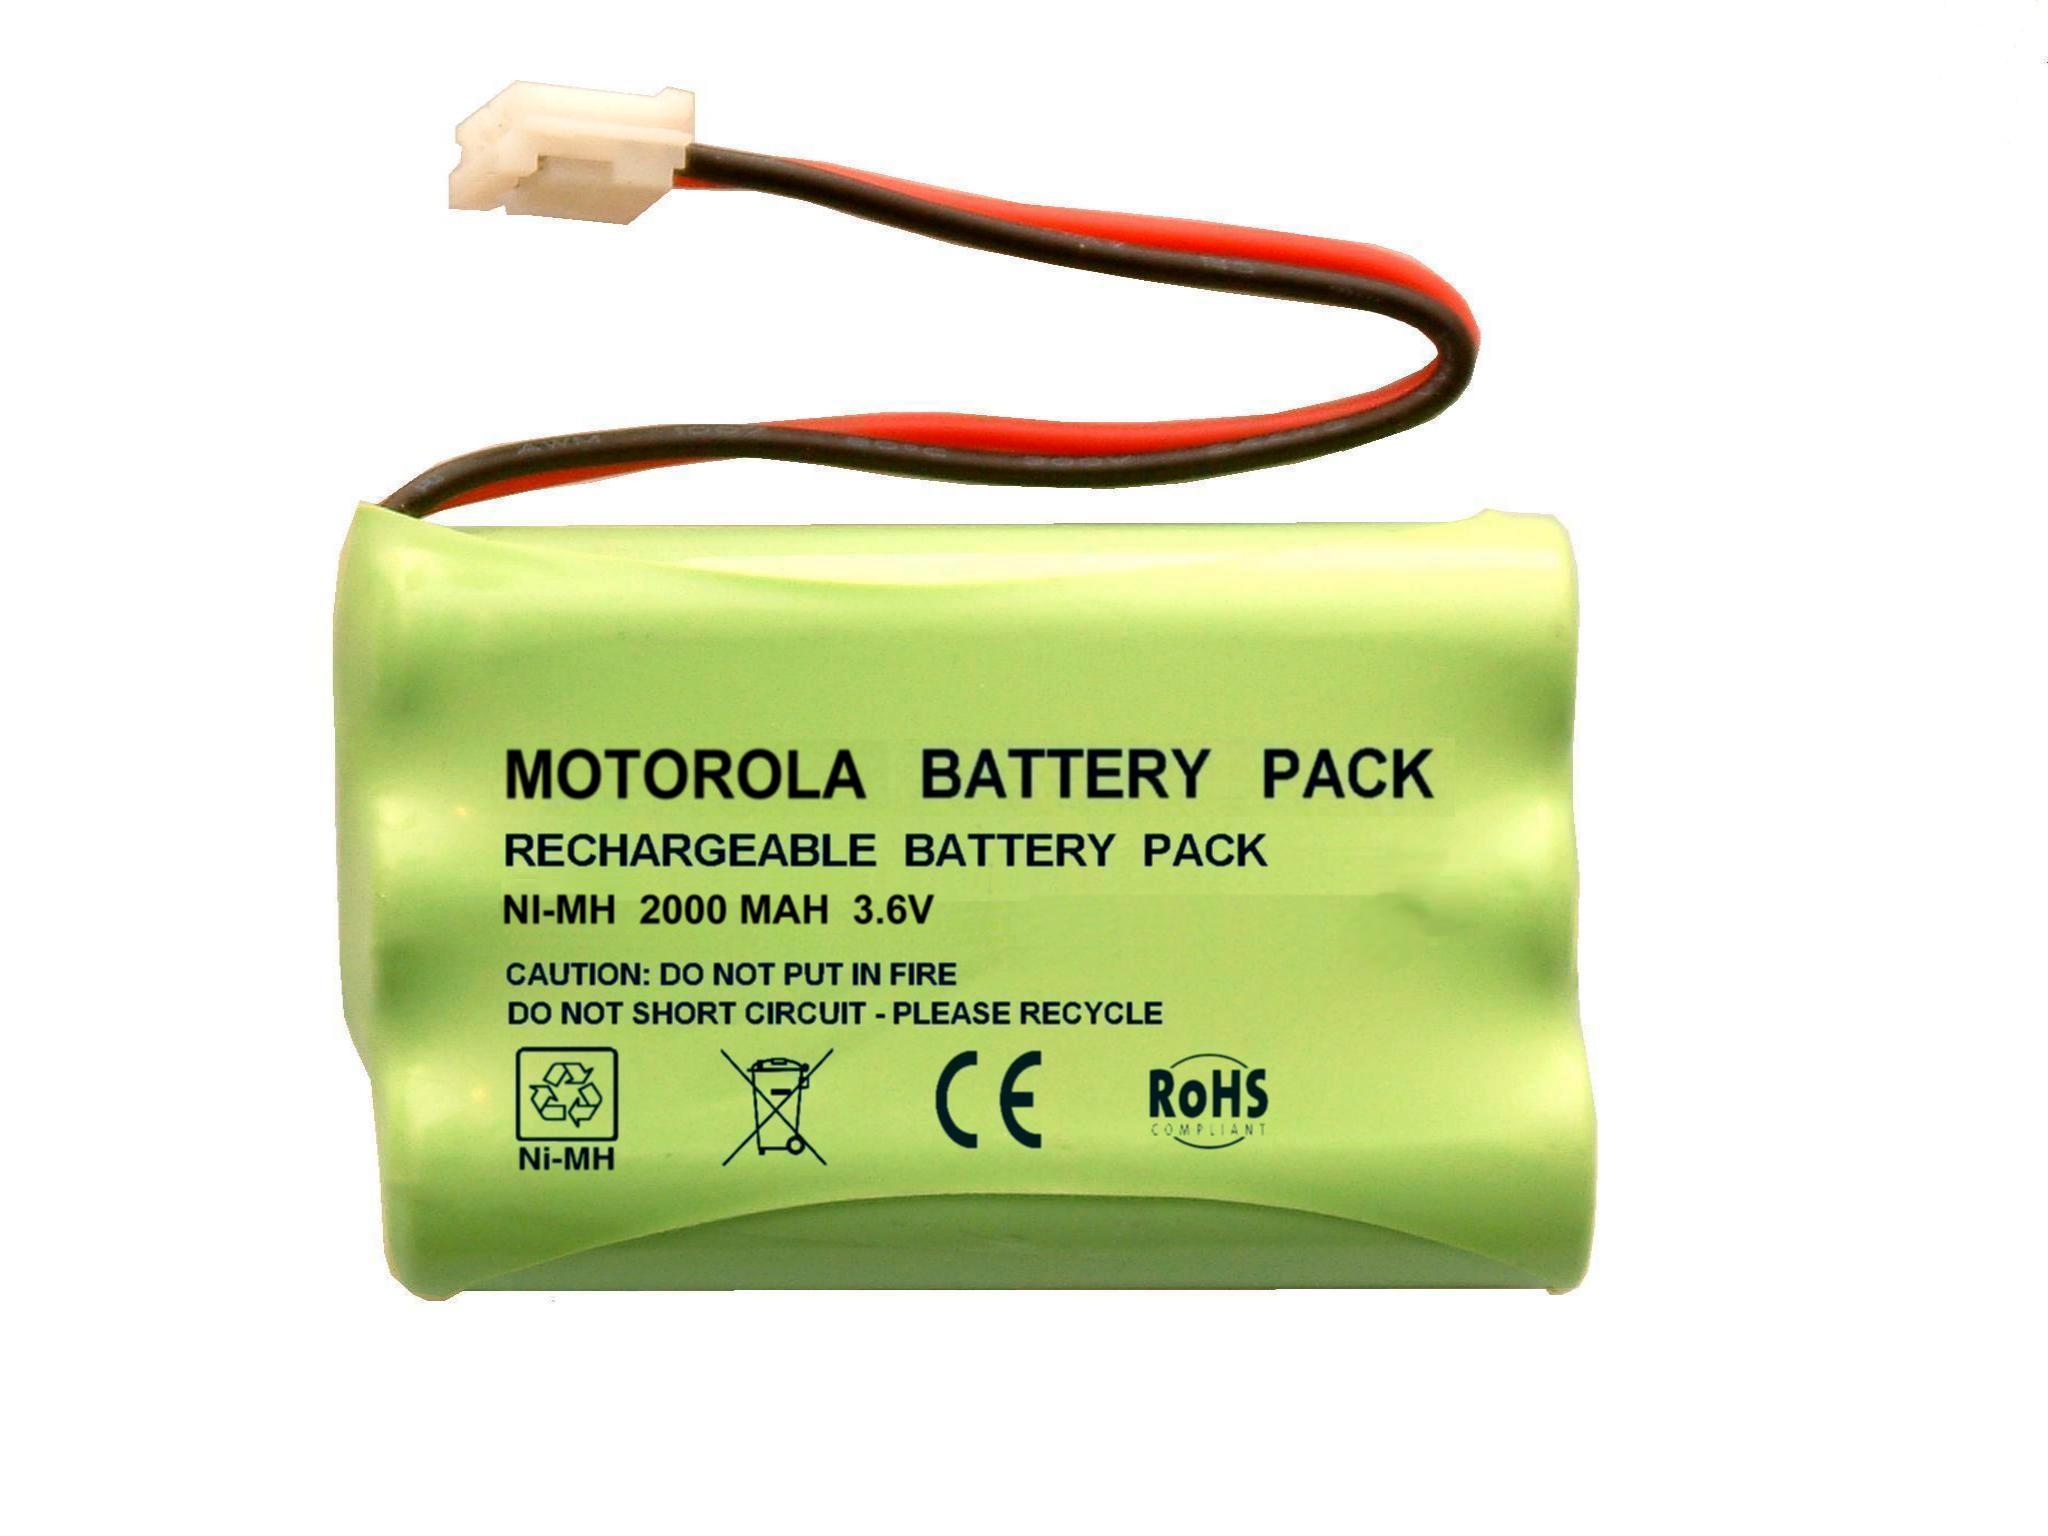 Motorola / Binatone MBP36 Baby monitor 3.6V 900mAh AAA battery pack